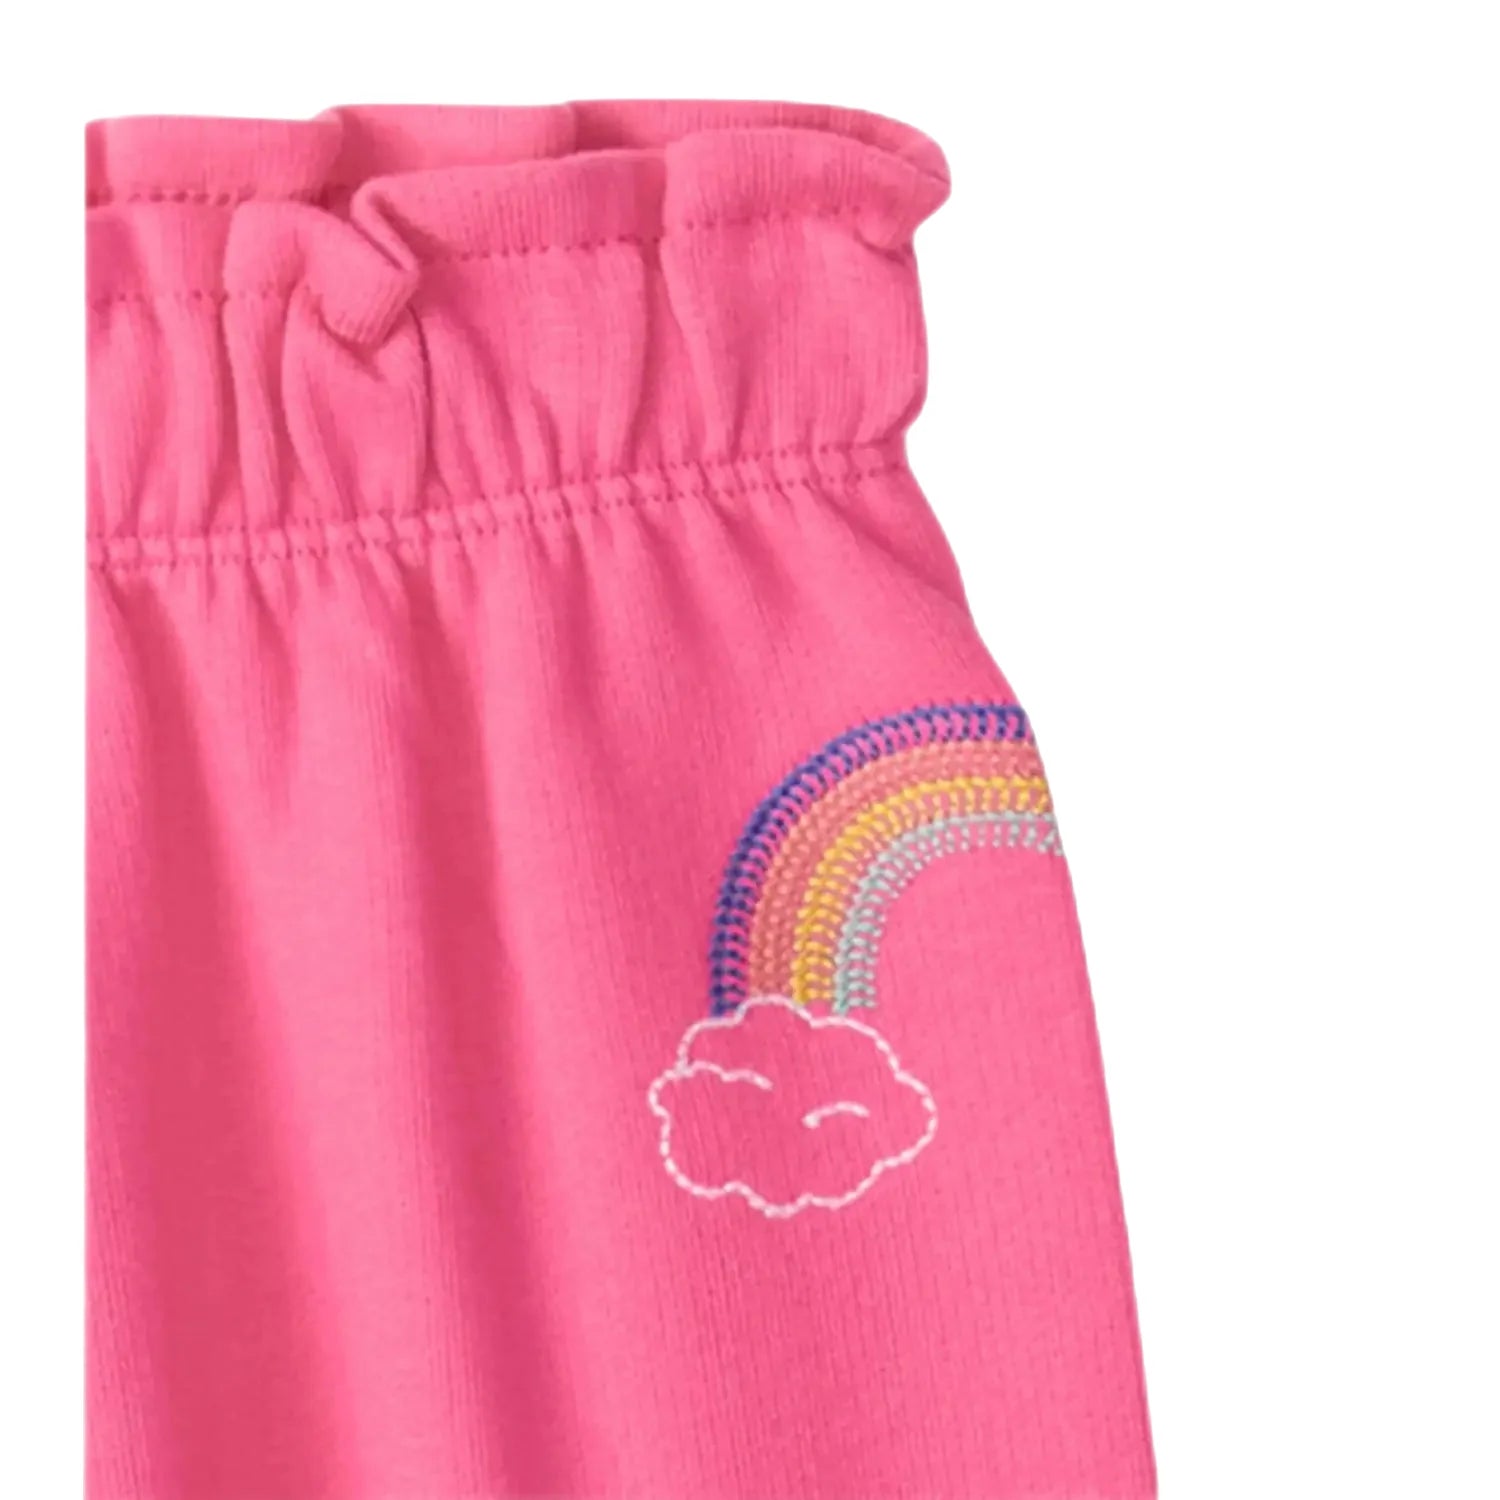 Hatley Baby Pink Love Everywhere Pants detail shown.